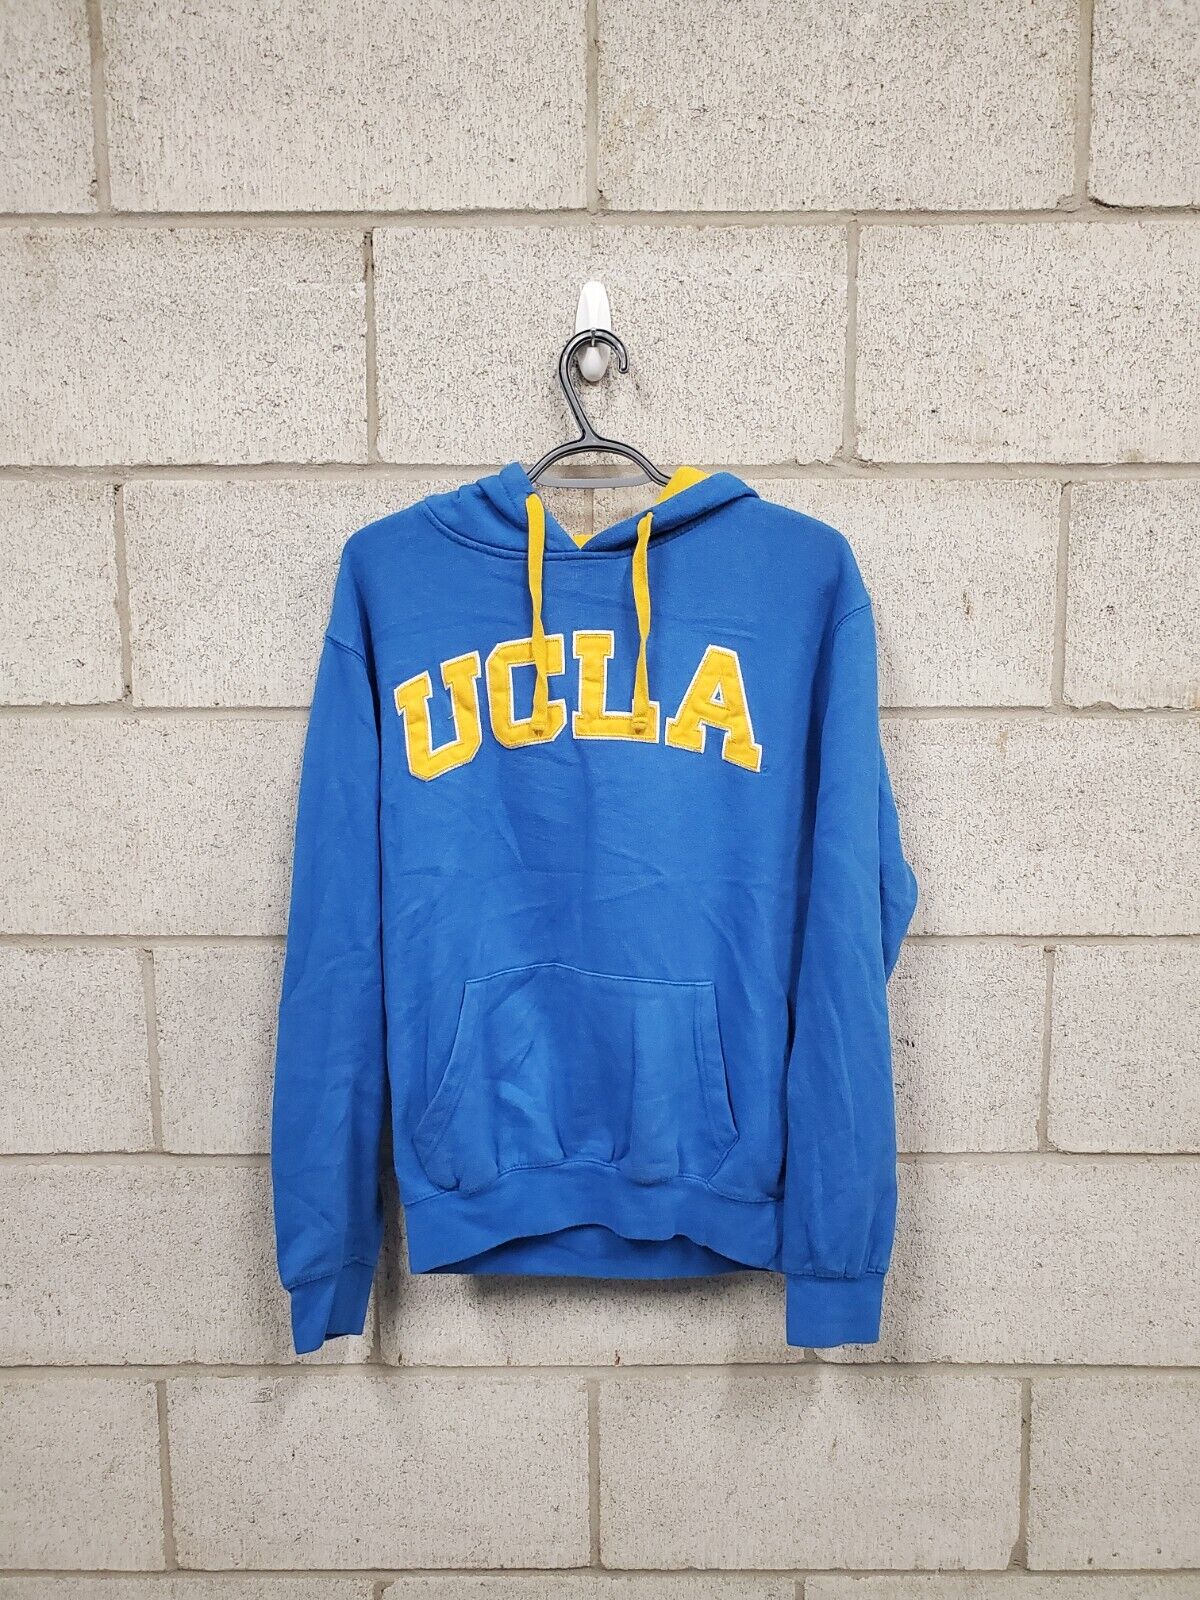 Mens UCLA Hoodie Size Medium